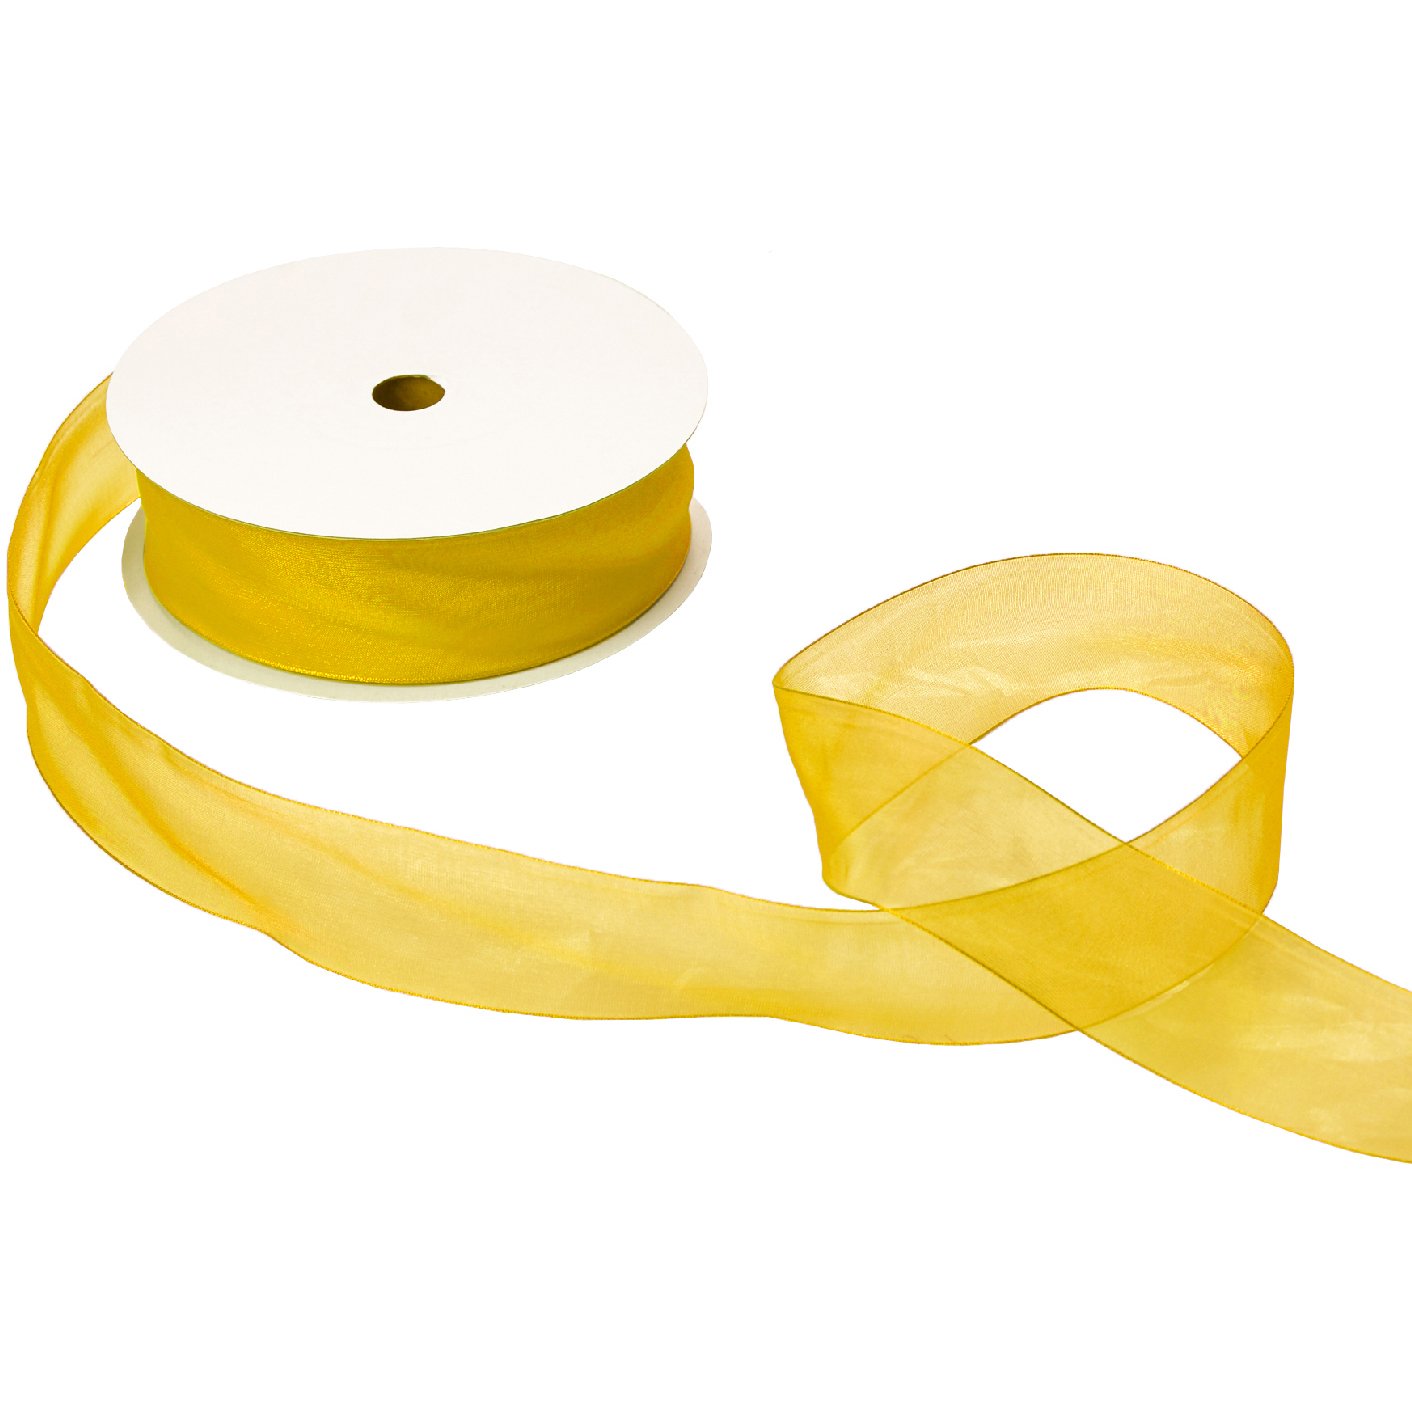 Jillson & Roberts Organdy Sheer Ribbon, 1 1/2" Wide x 100 Yards, Yellow